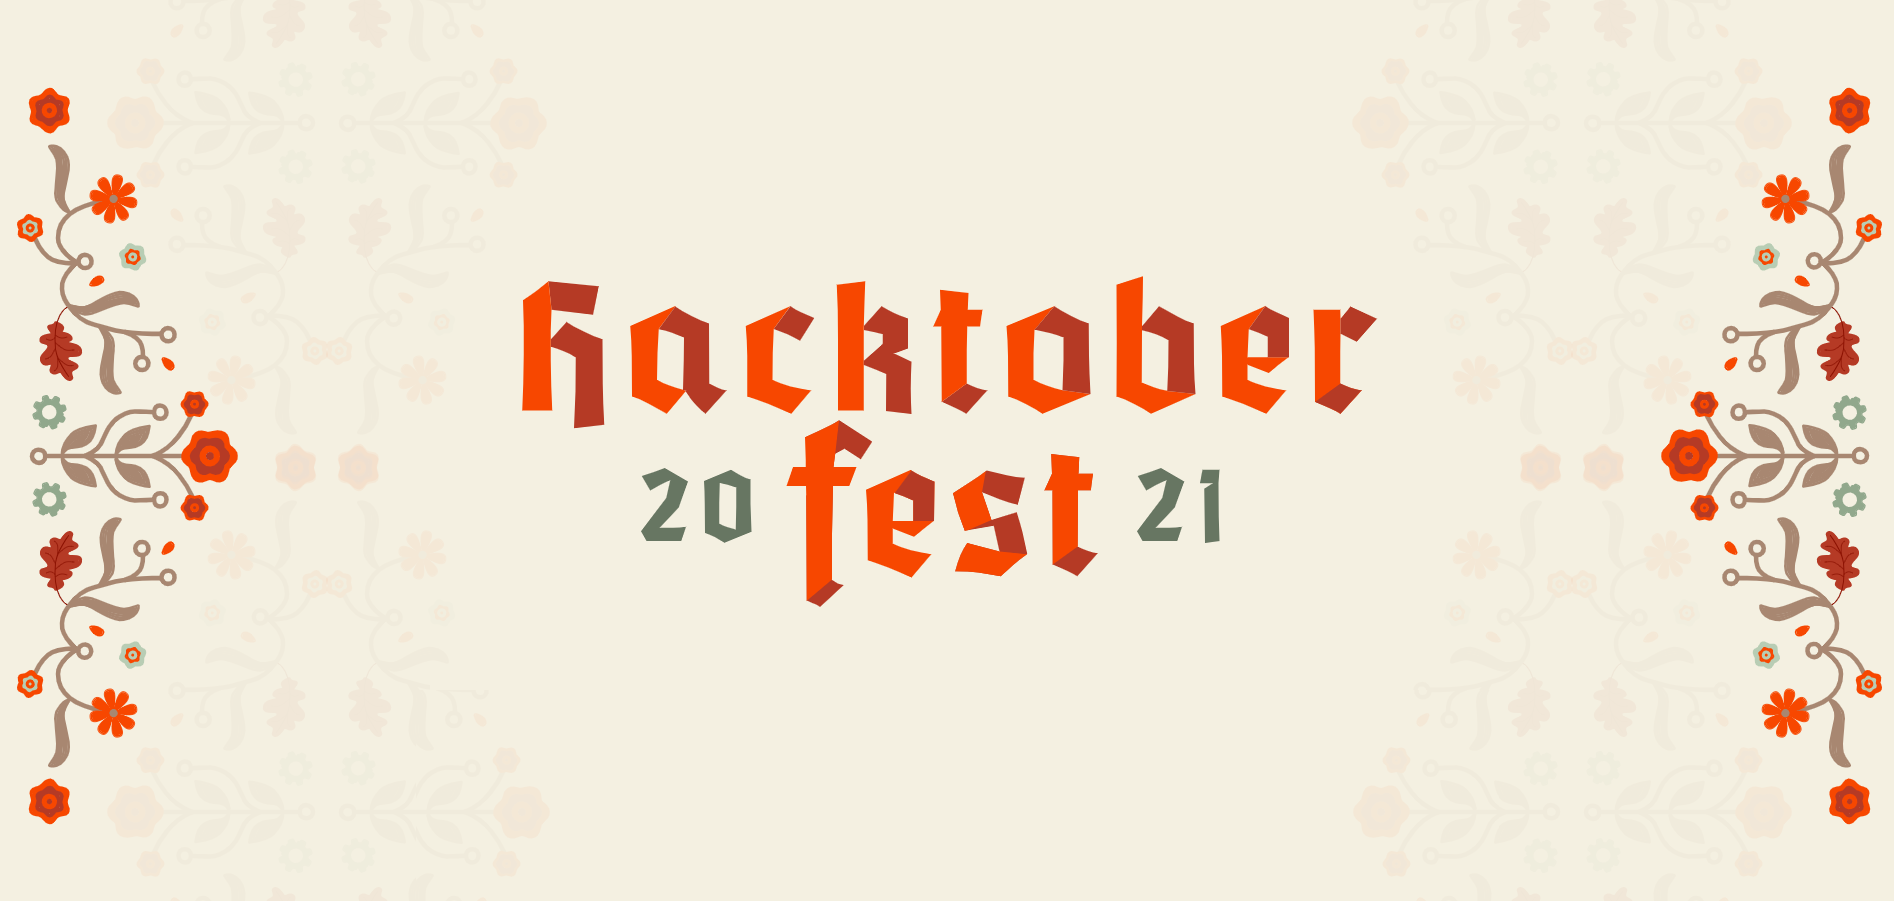 HacktoberFest2021.png